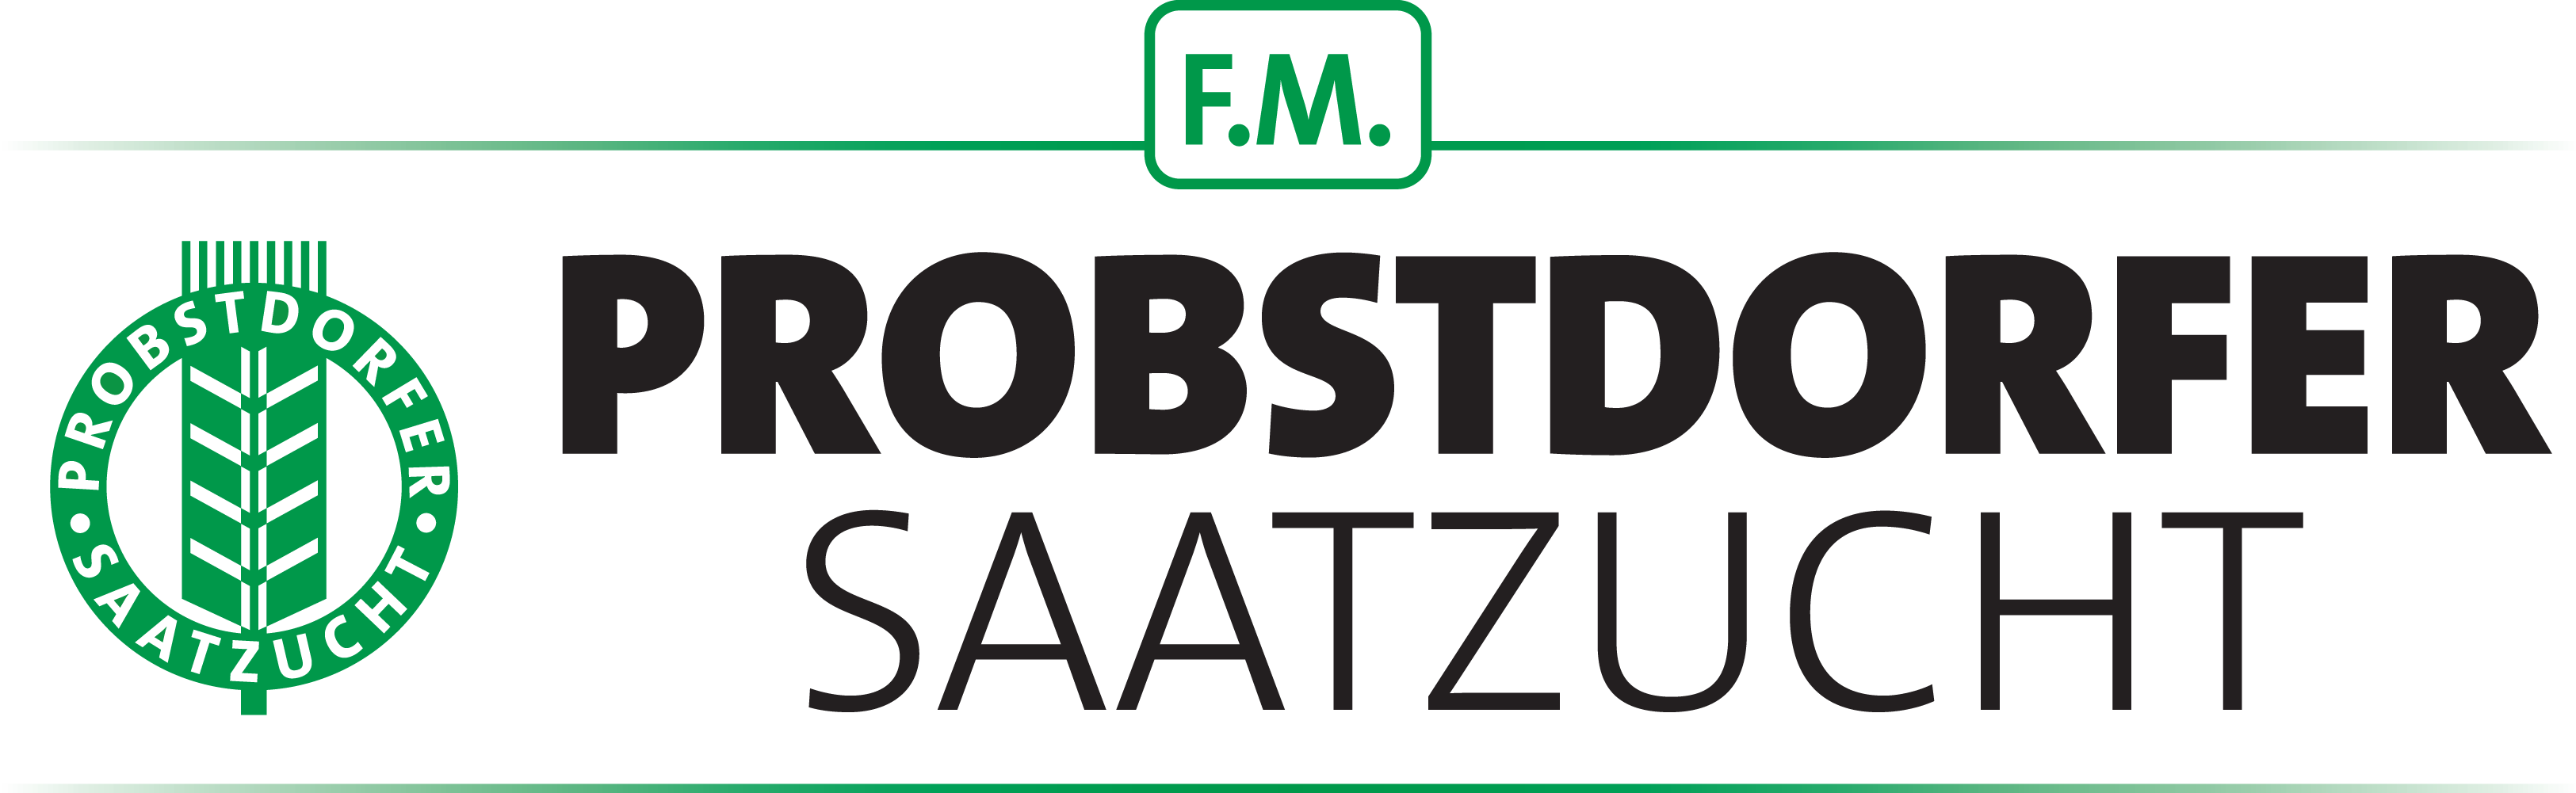 Probstdorfer Saatzucht GesmbH & CoKG